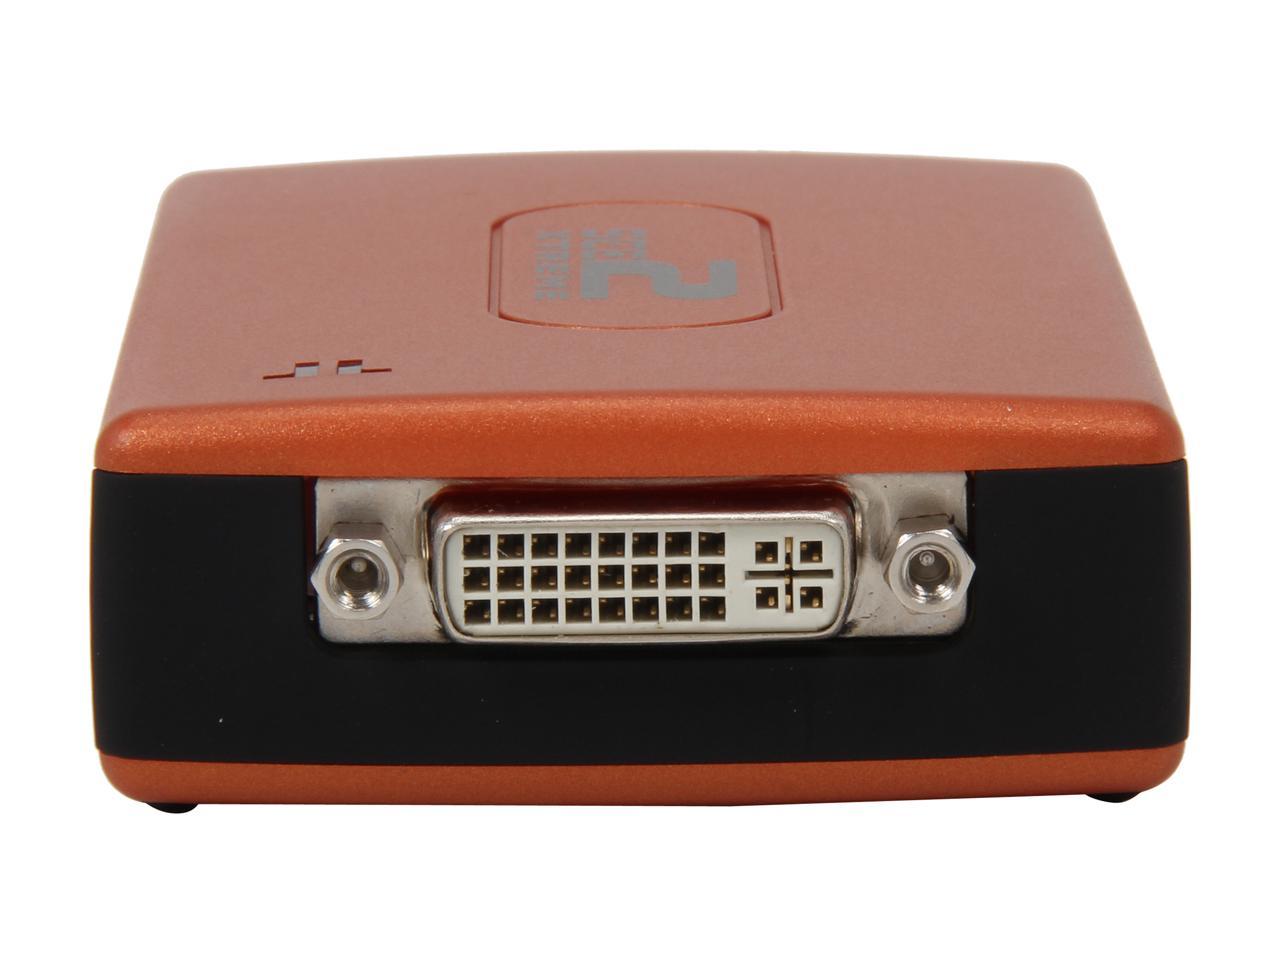 TRITTON SEE2 Xtreme USB to DVI External Video Card Adapter TRI 